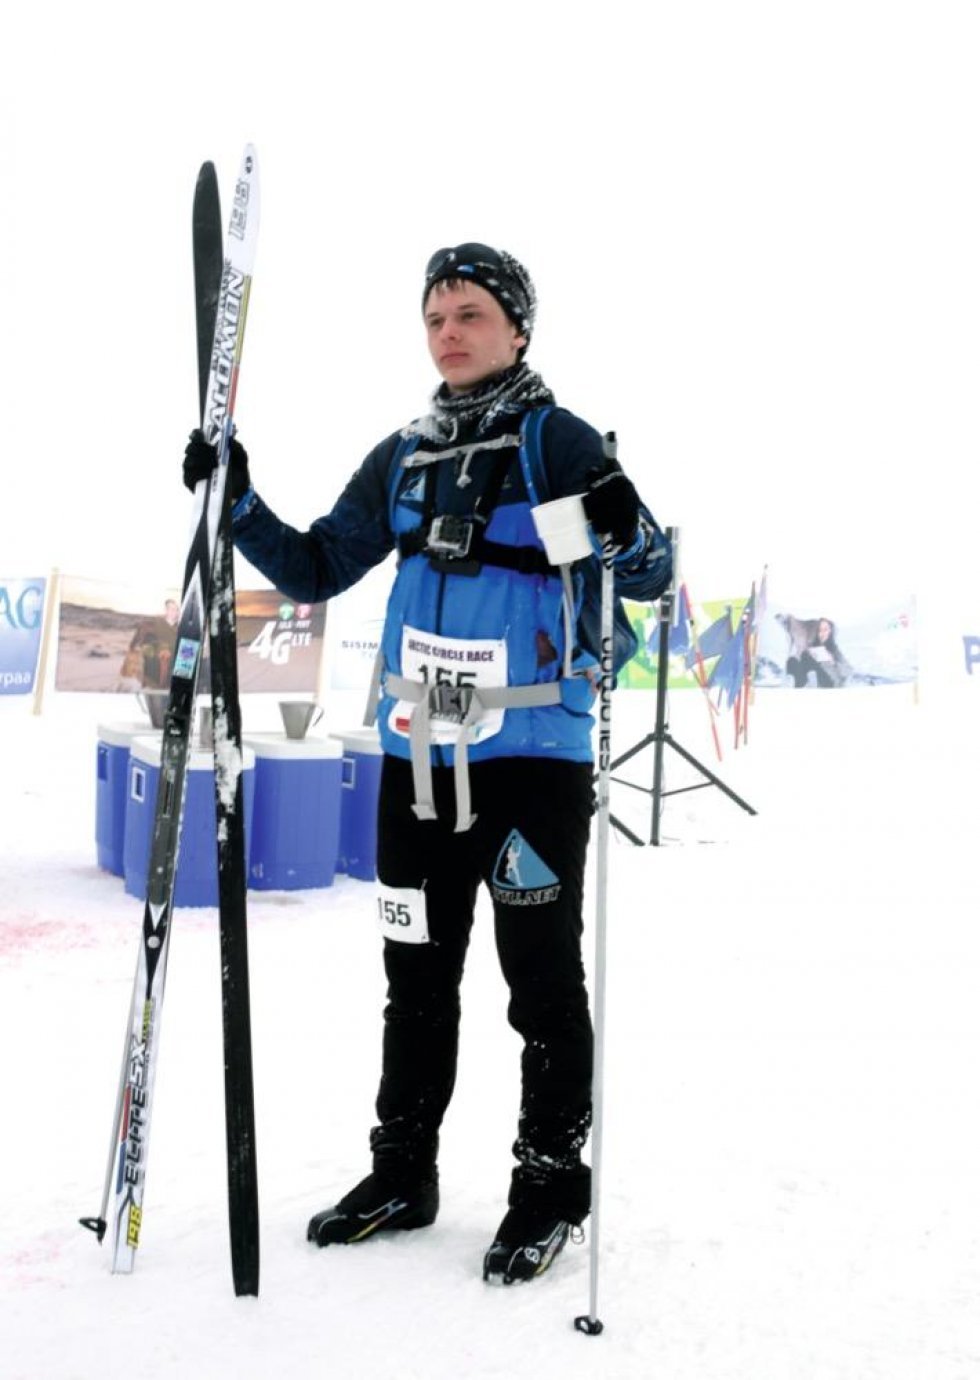 "Sådan gennemførte jeg verdens hårdeste skiløb"